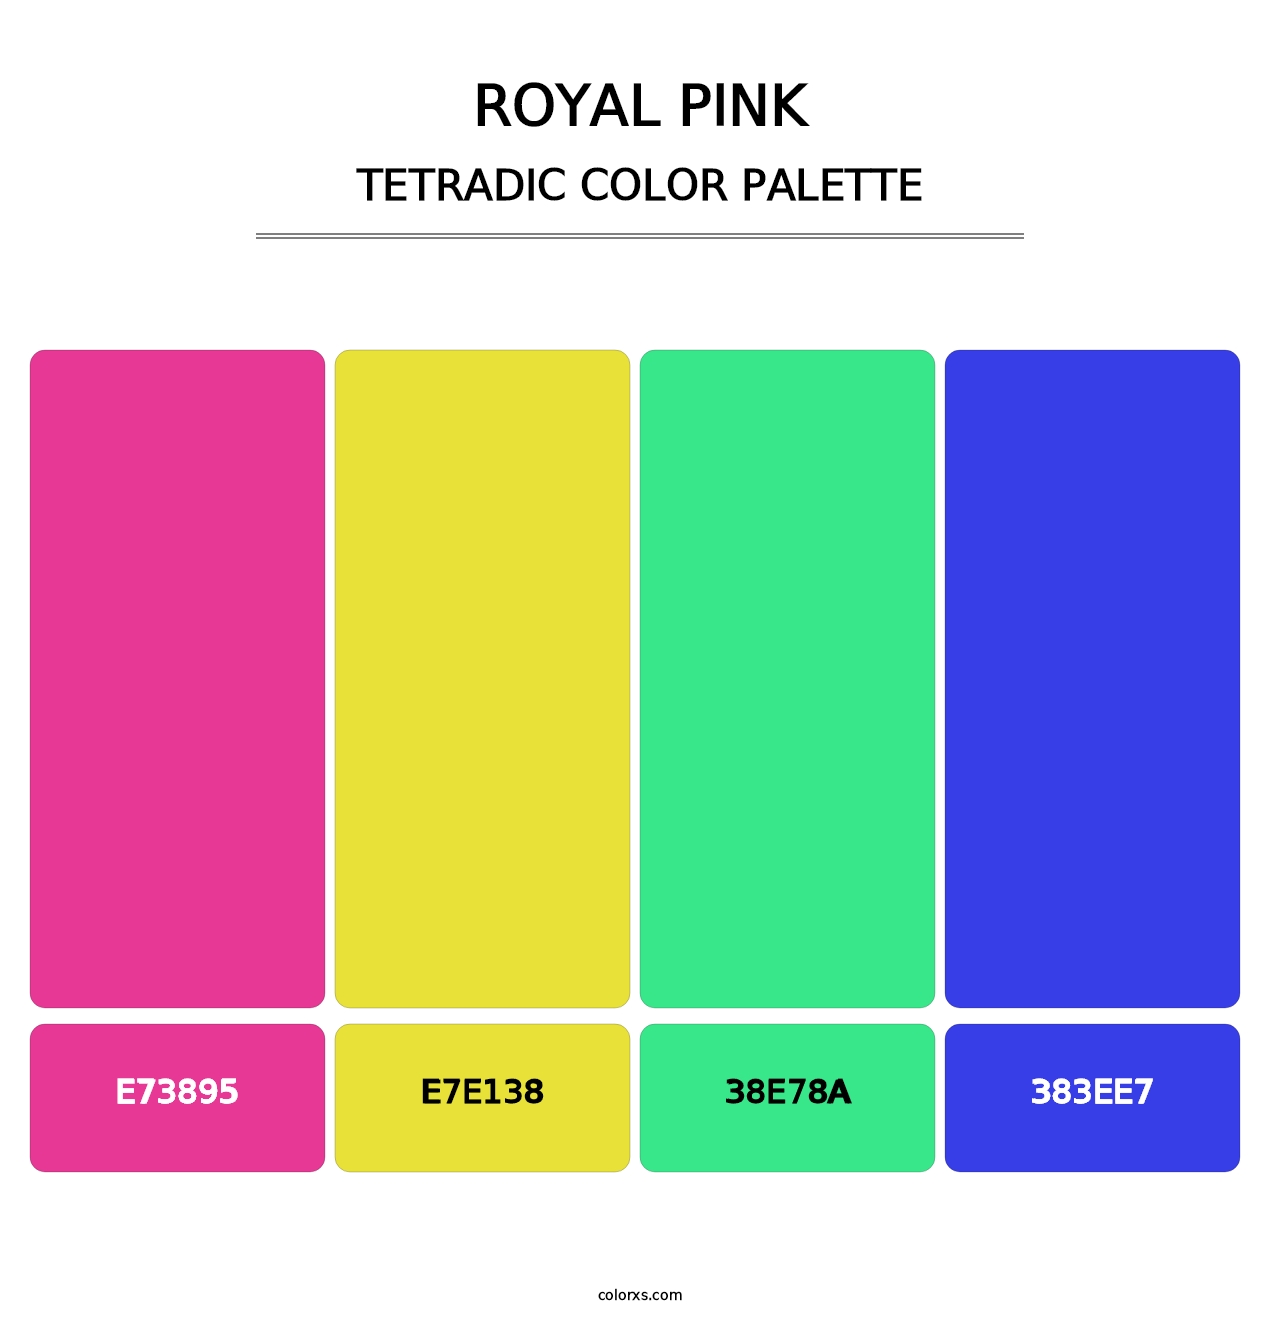 Royal Pink - Tetradic Color Palette